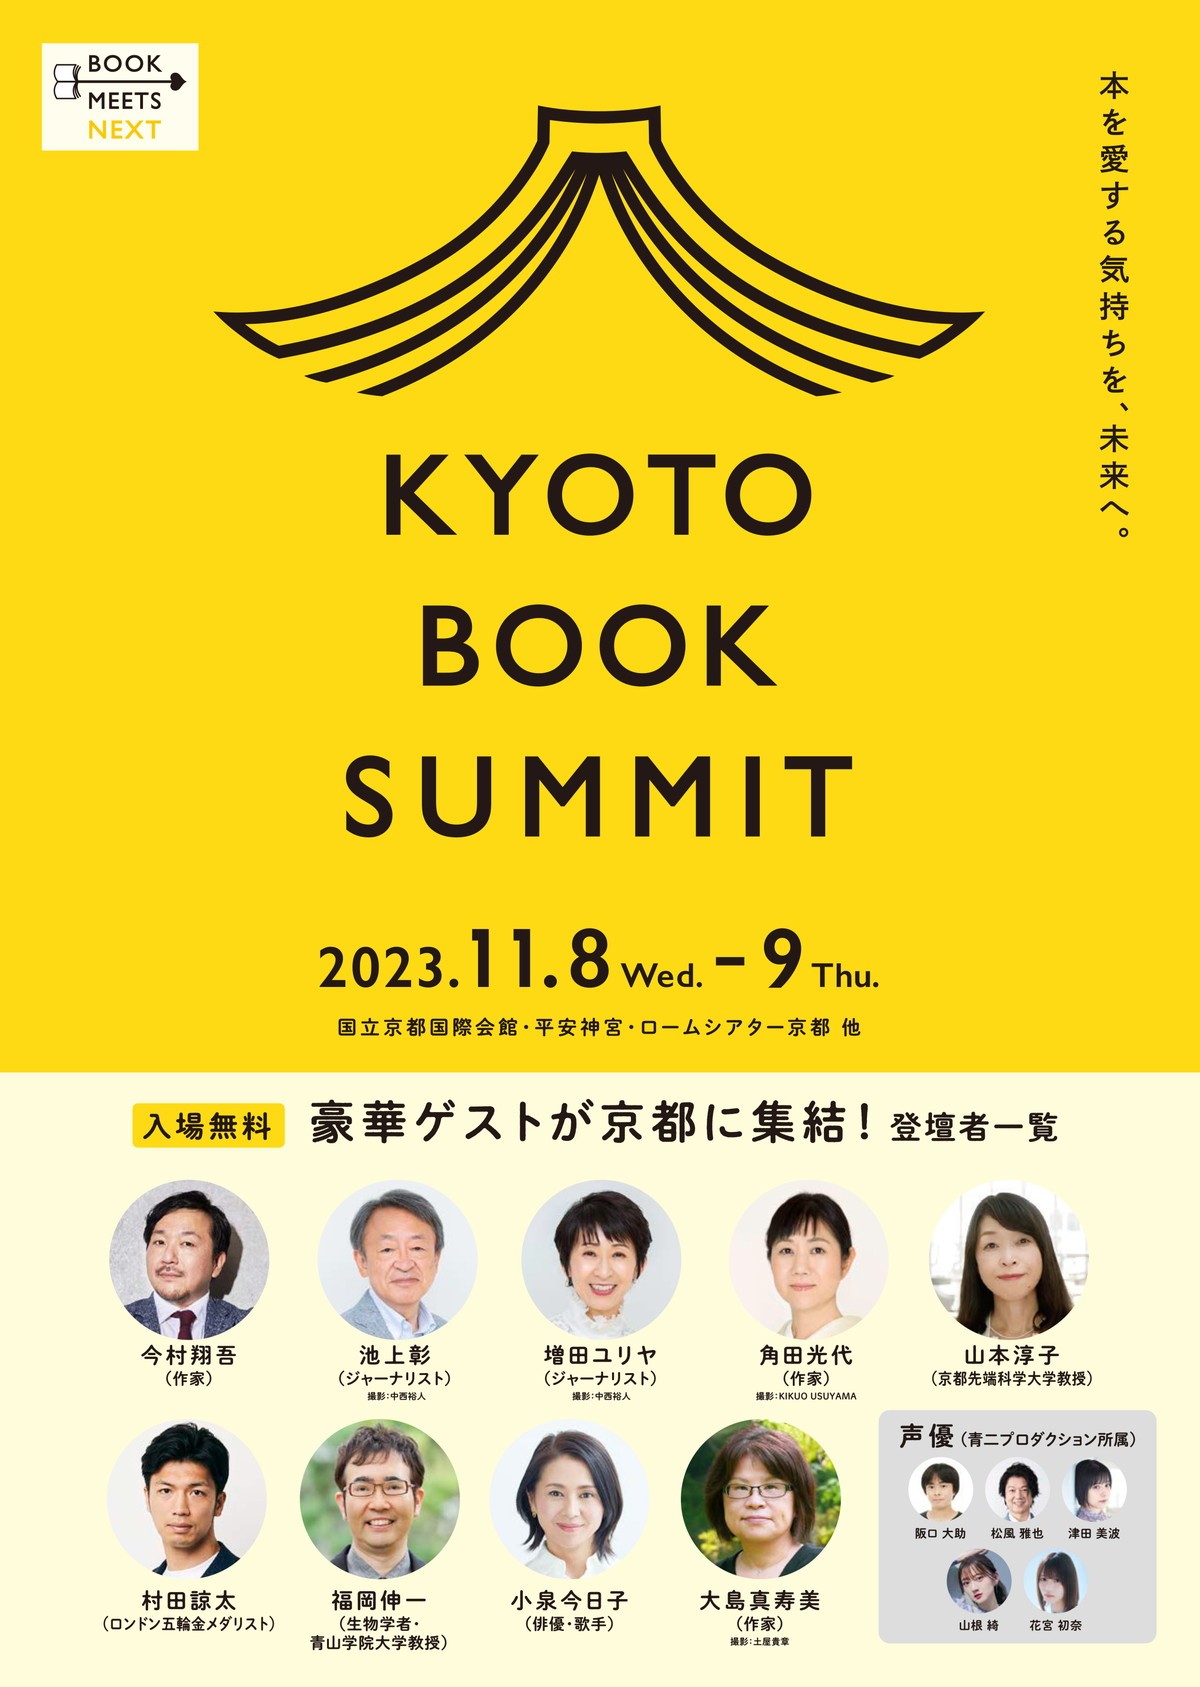 KYOTO BOOK SUMMIT